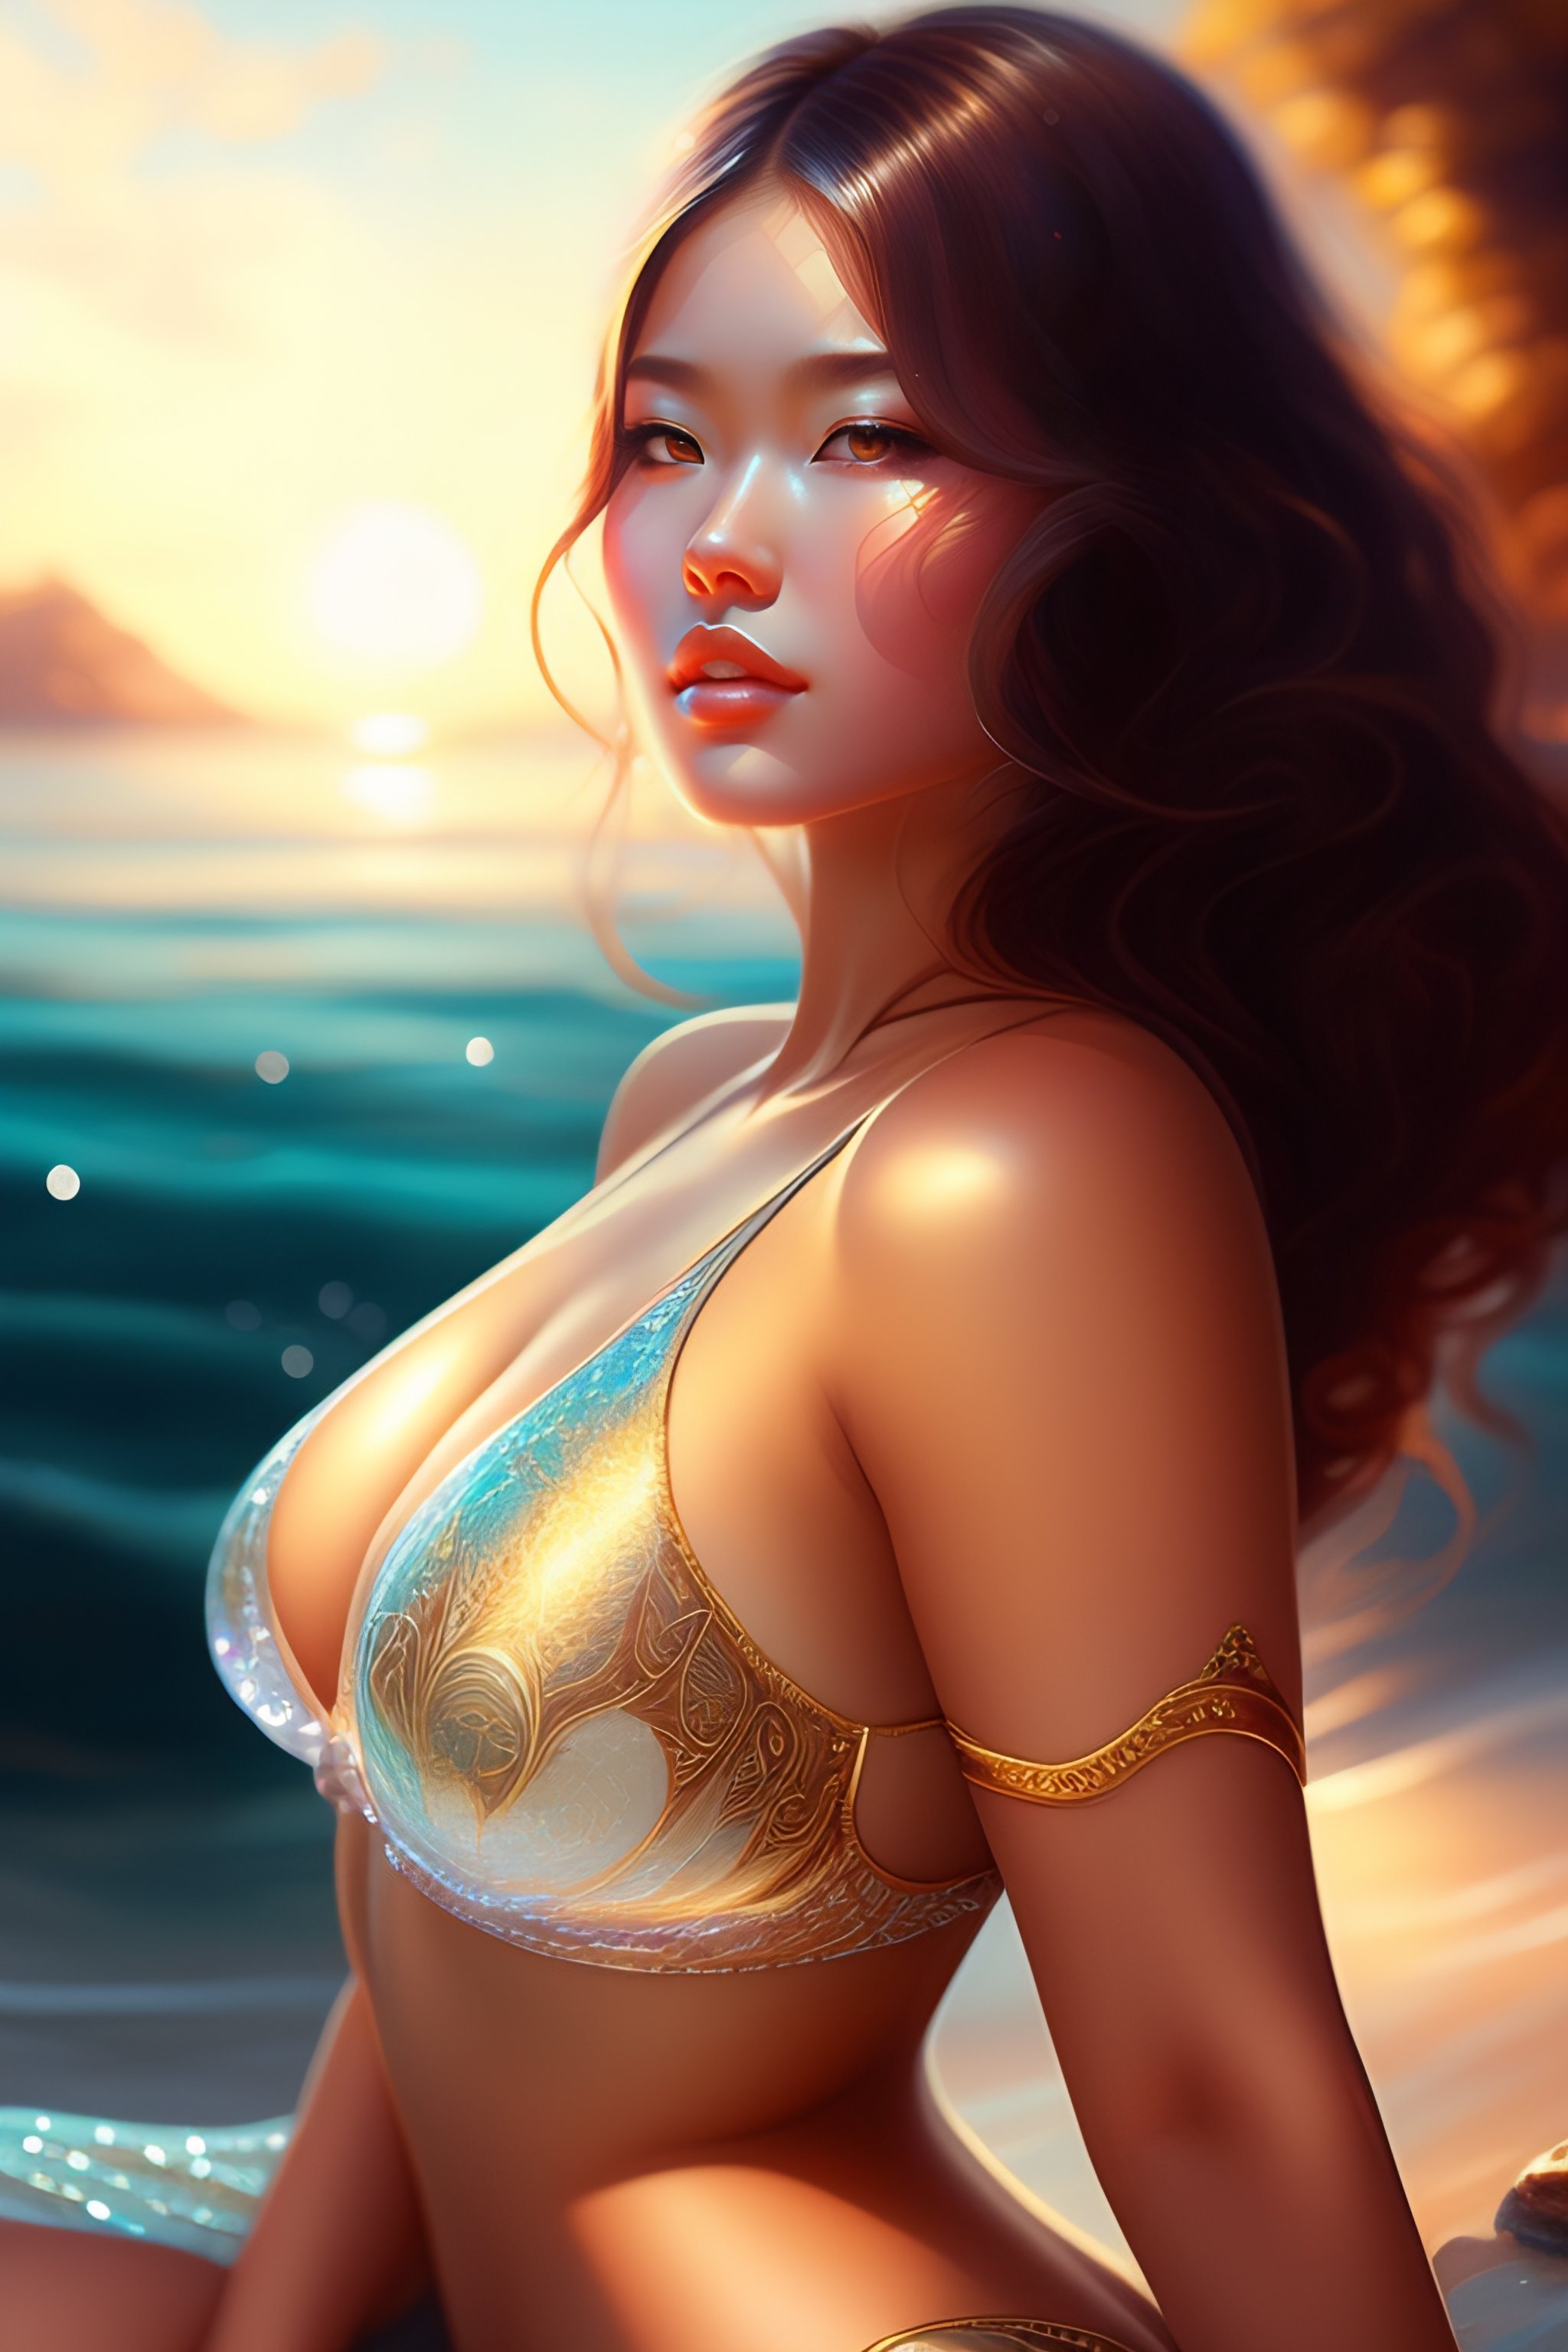 Lexica - A beautiful Plump goddess girl wear transparent bikini,sitting,pretty  face,key art, fantasy illustration, award winning, intricate detail re